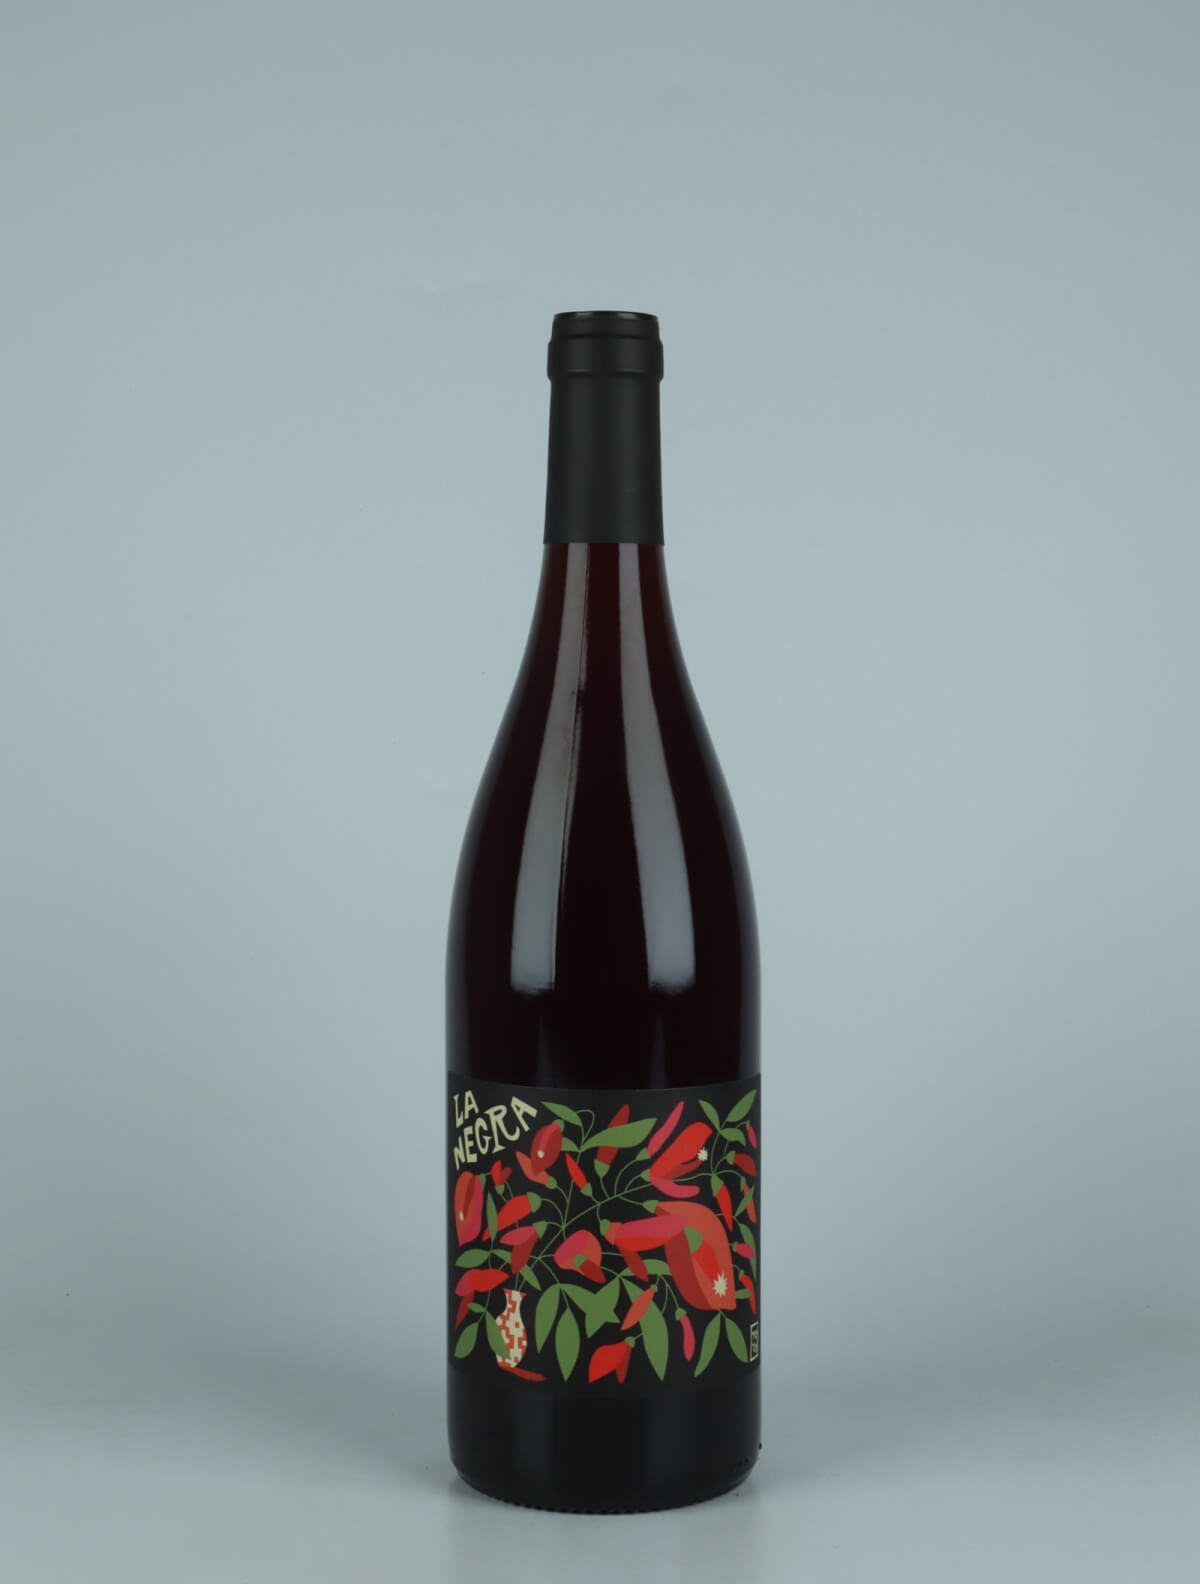 A bottle 2023 La Negra Red wine from Domaine Yoyo, Rousillon in France